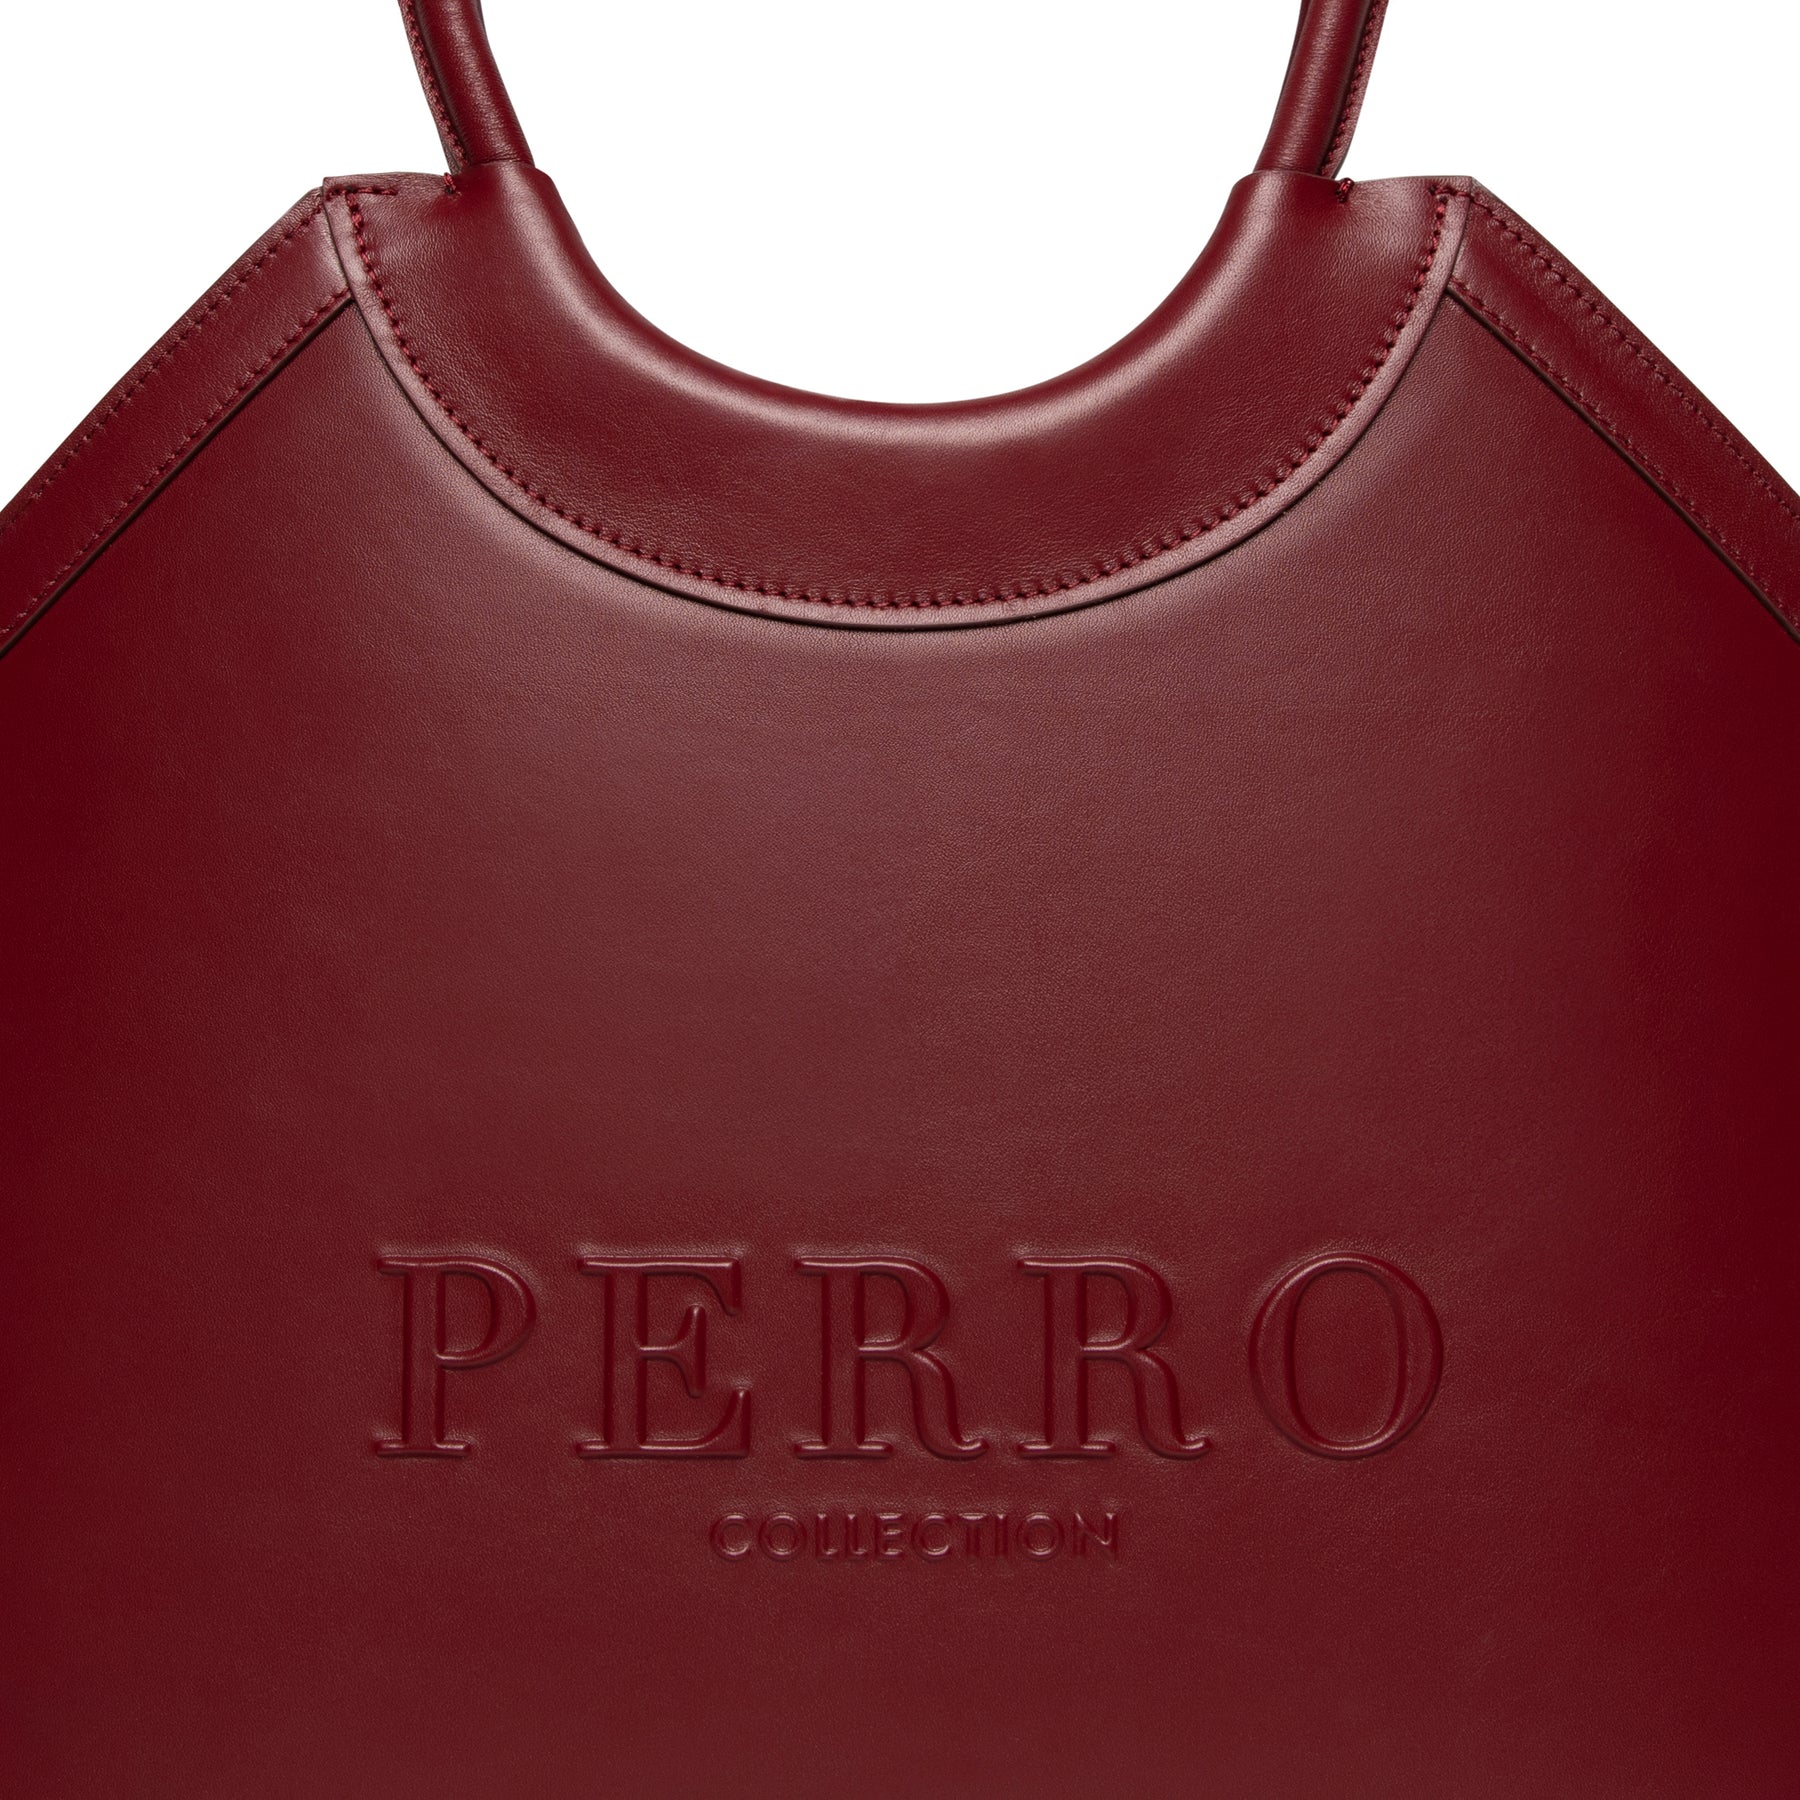 Perro shopper red